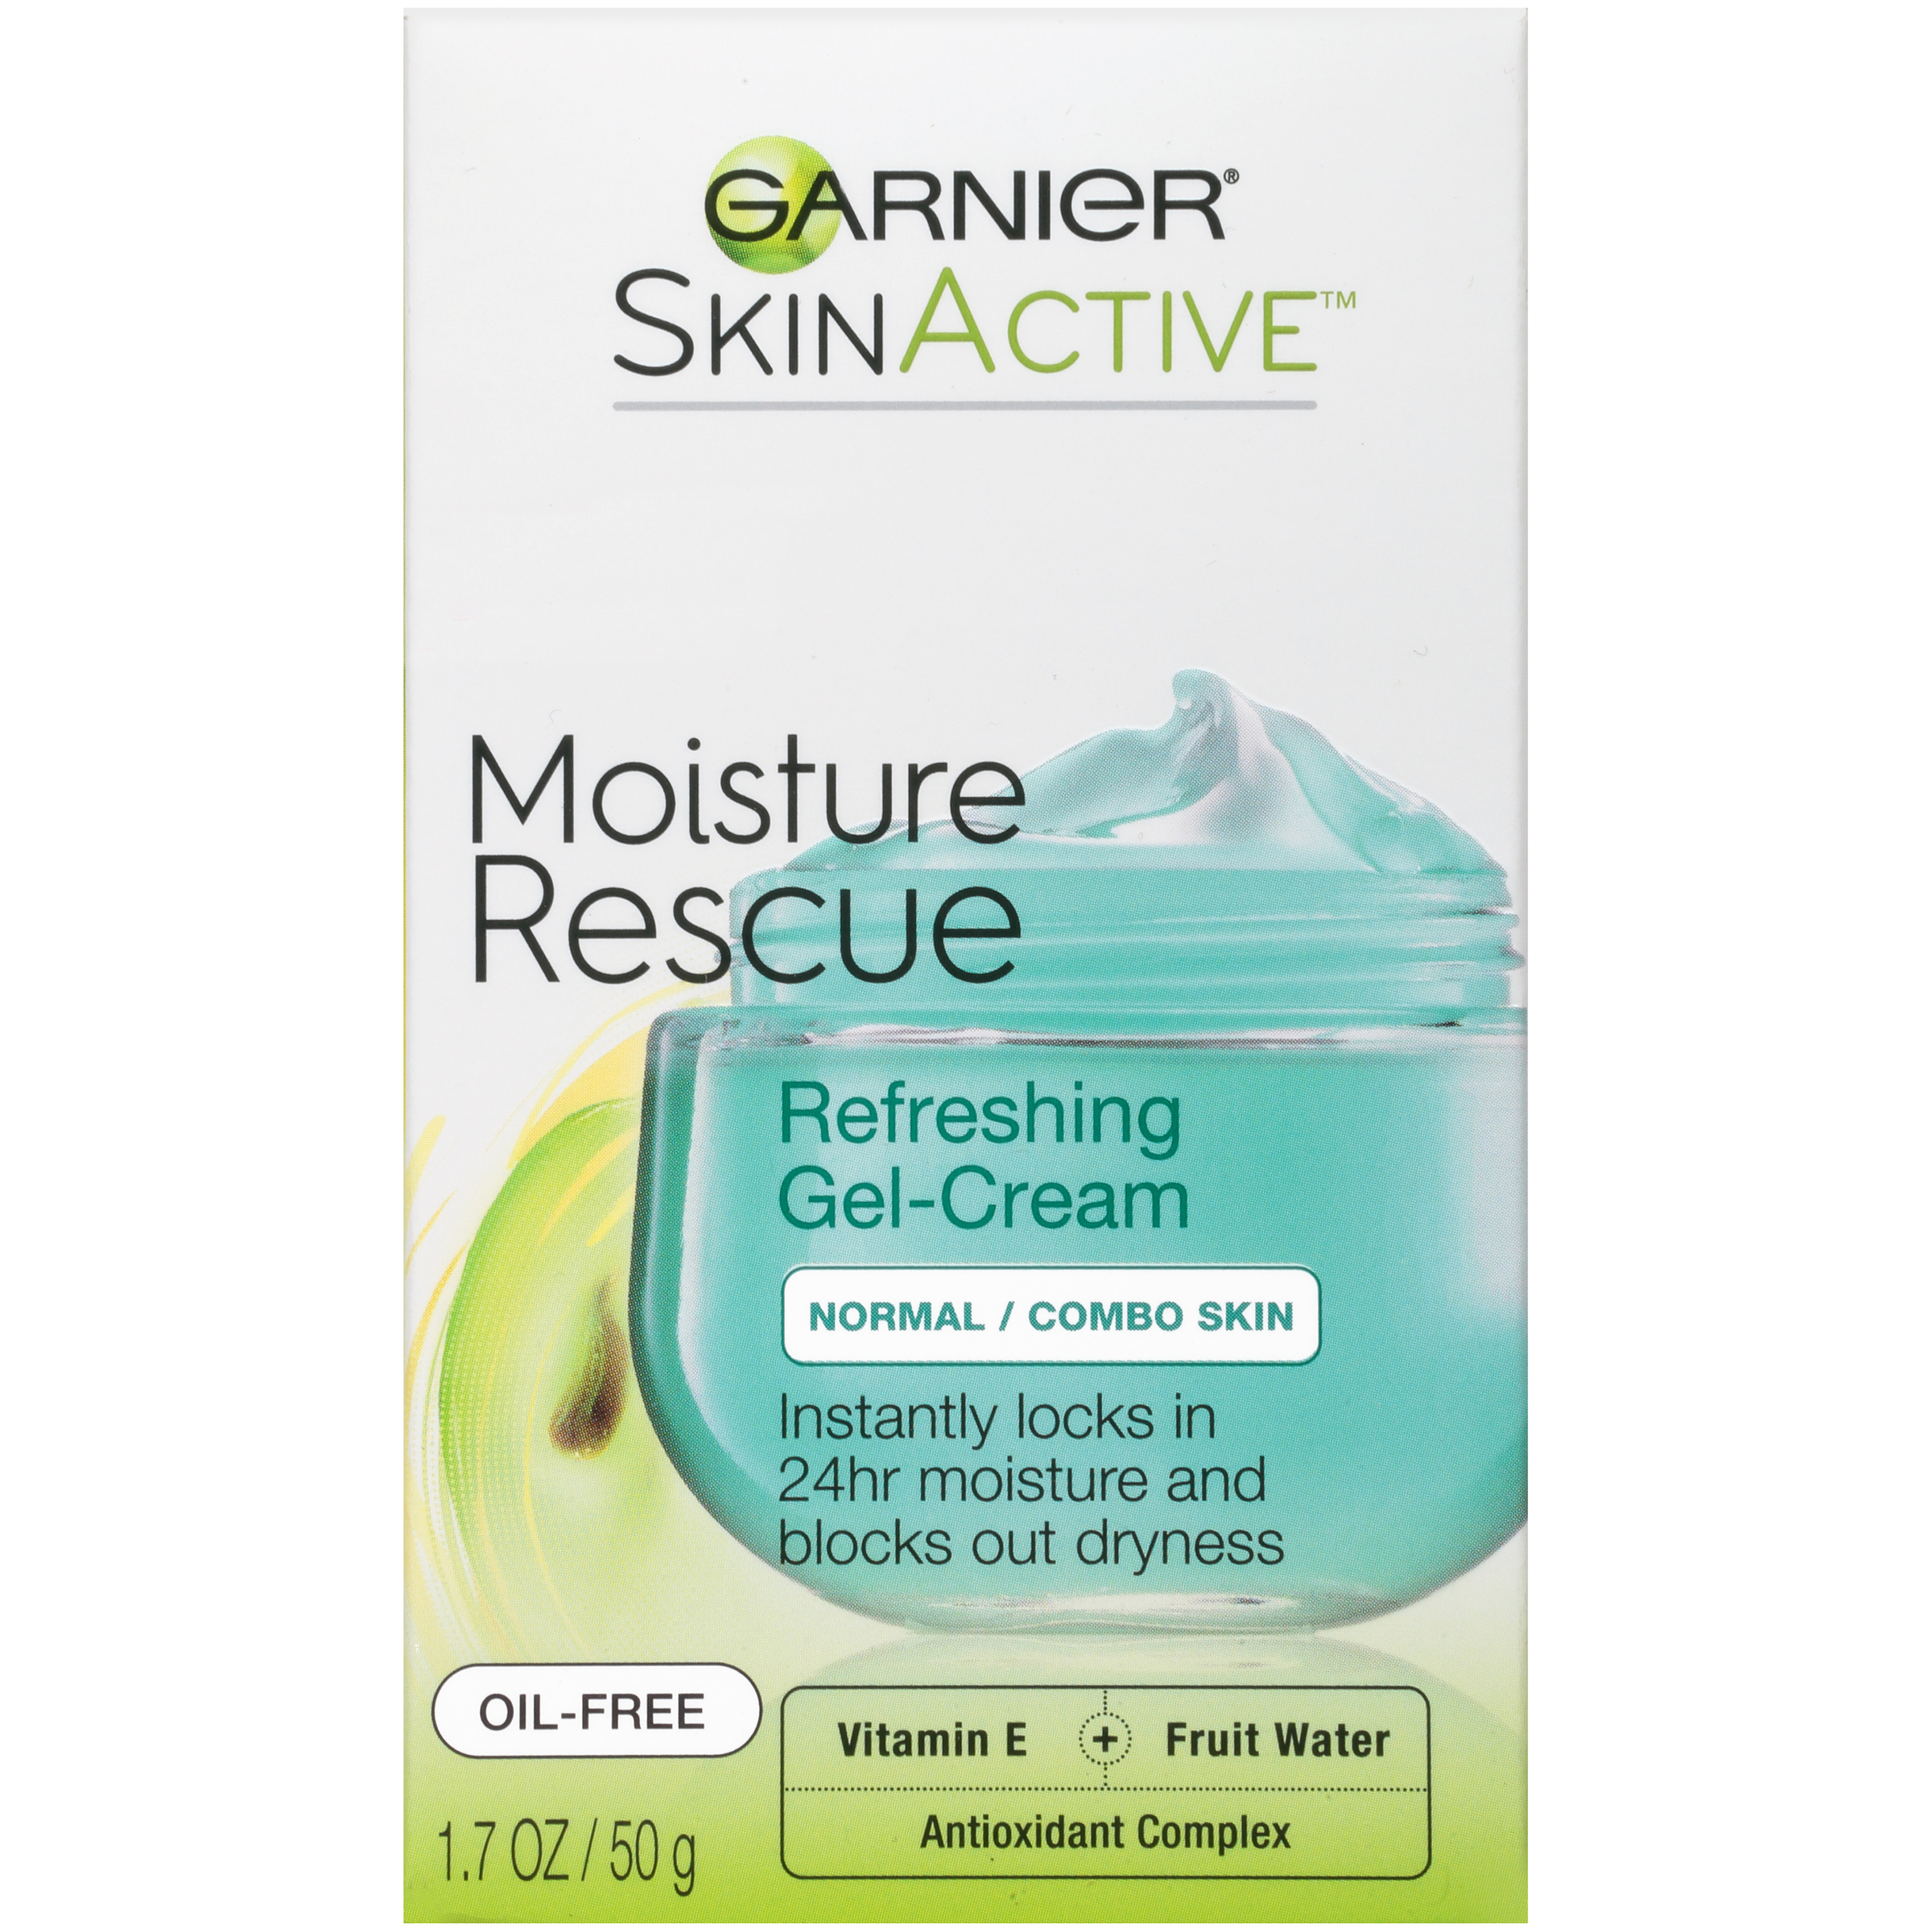 Garnier SkinActive Moisture Rescue Refreshing Gel Cream Normal and Combo Skin, 1.7 oz - image 2 of 8